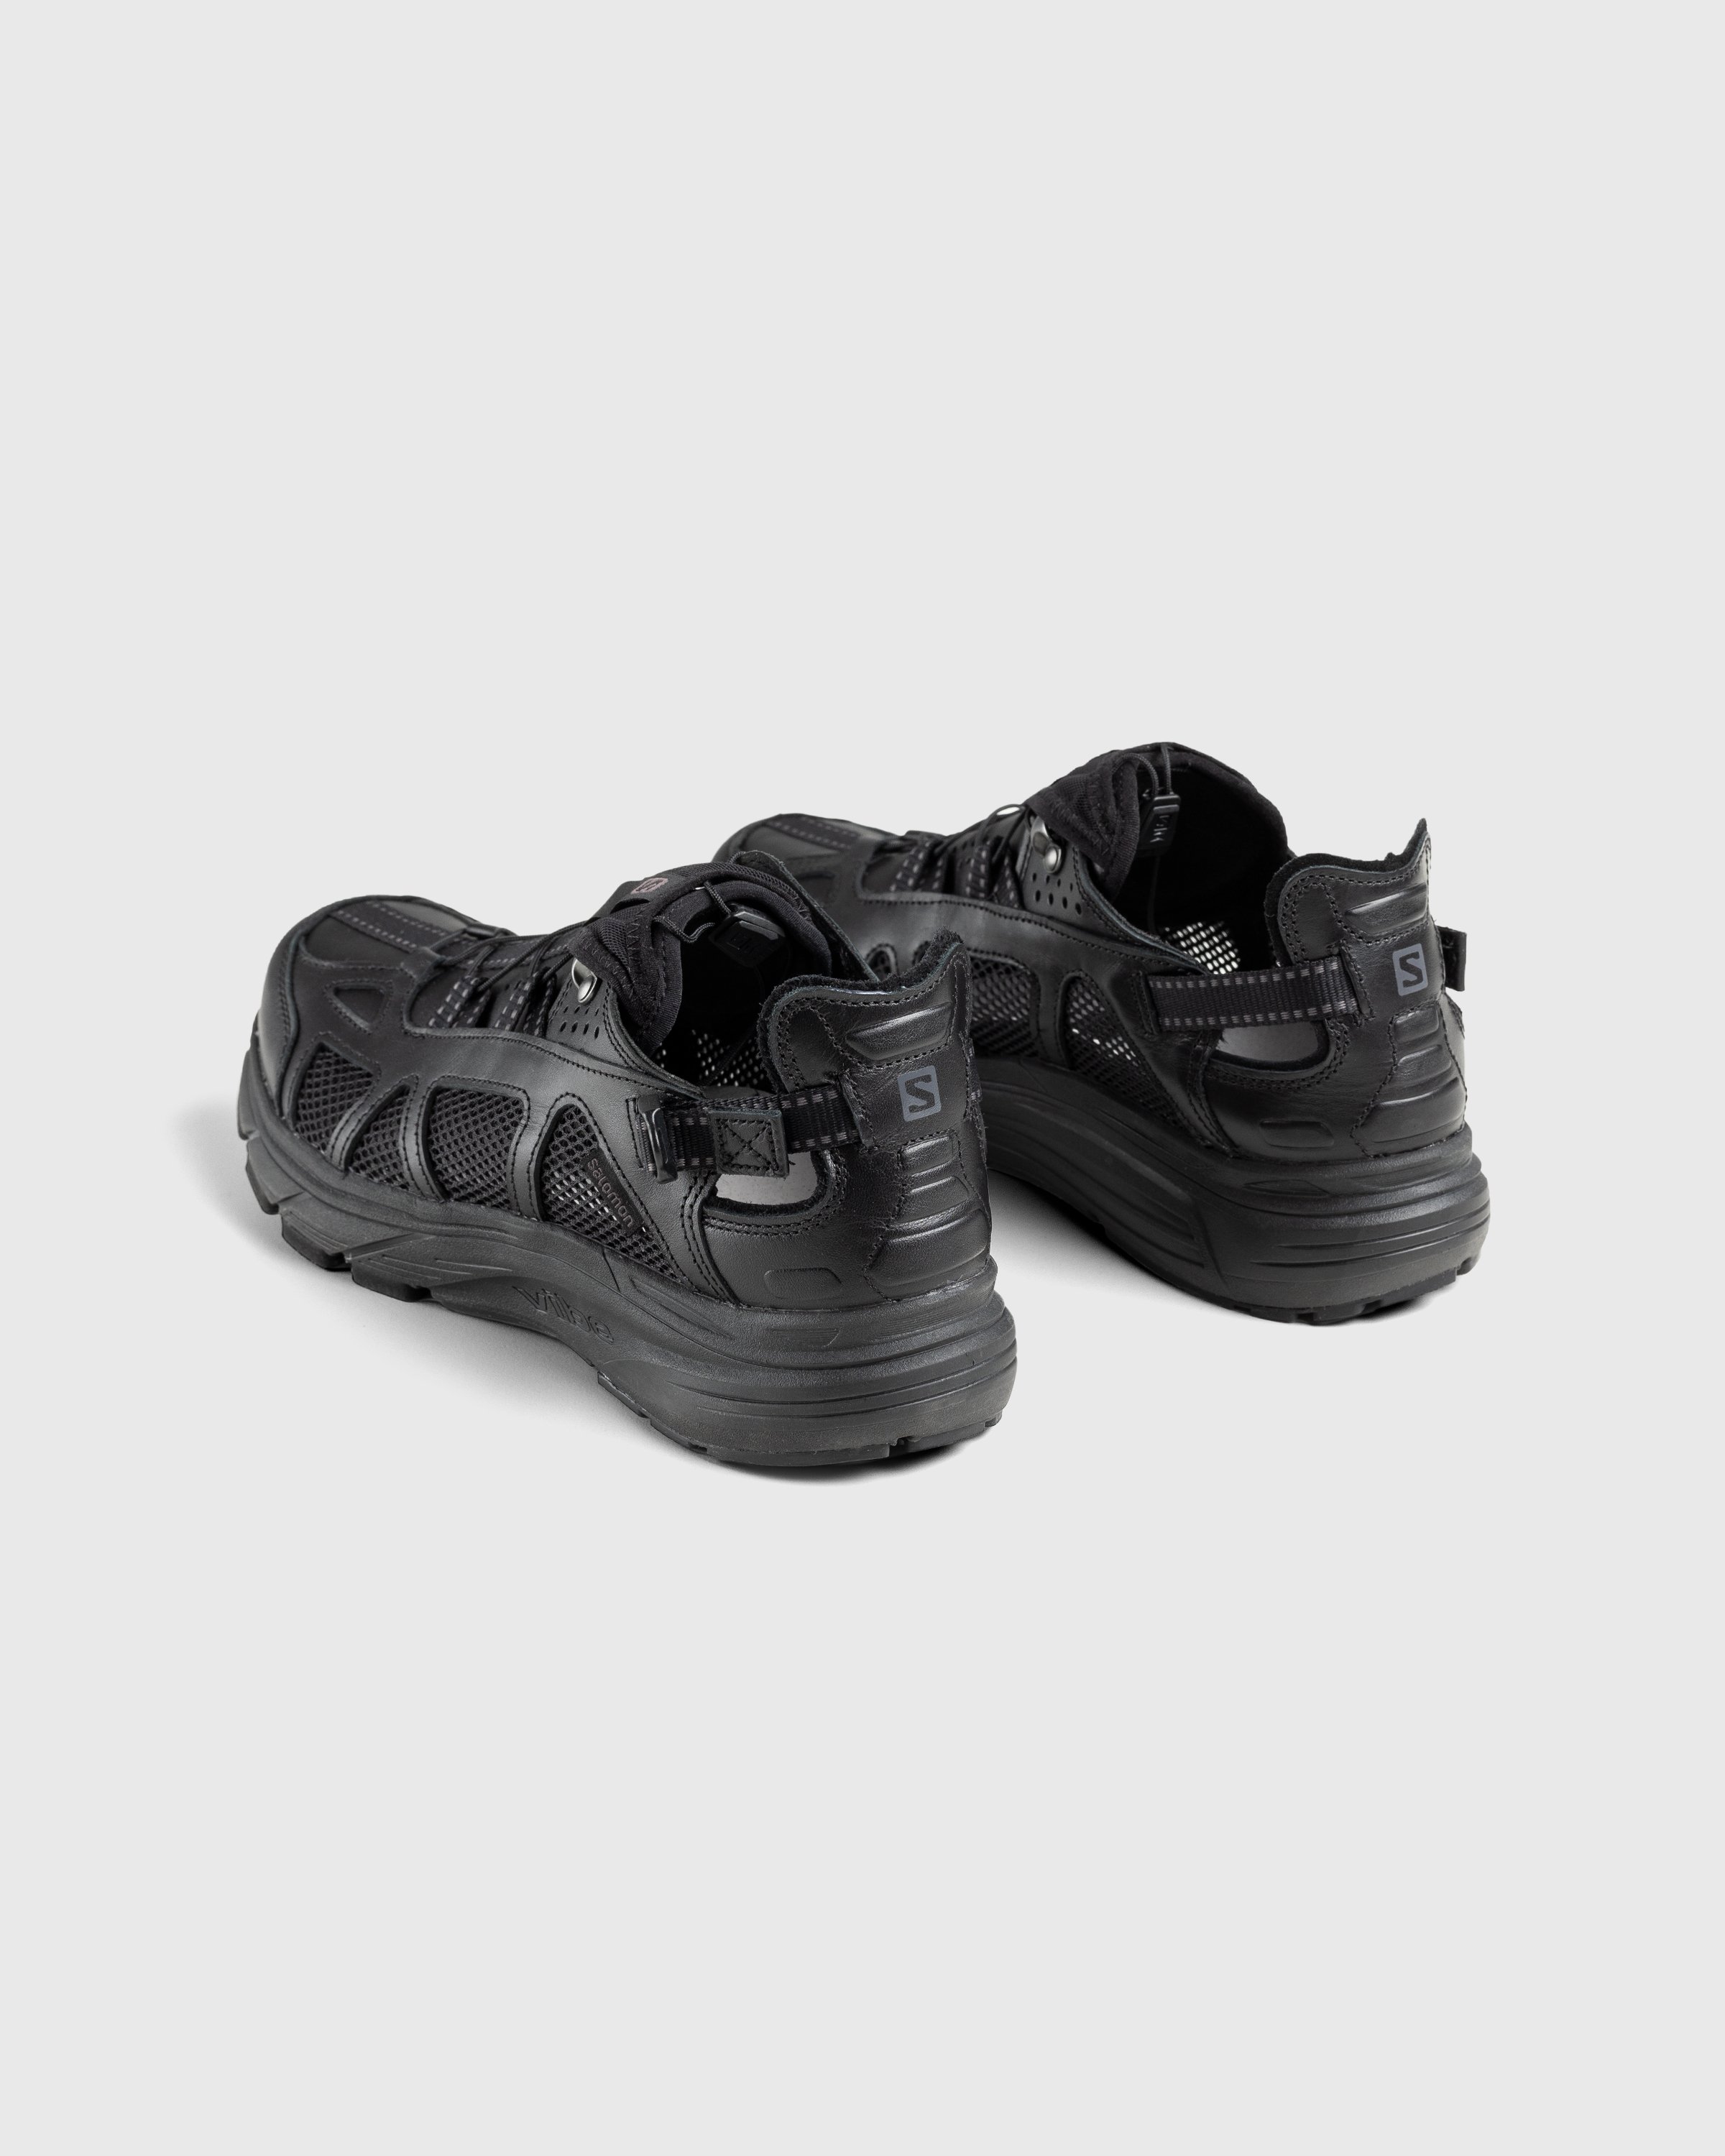 Salomon - Techsonic Leather Advanced Black/Black/Magnet - Footwear - Black - Image 3